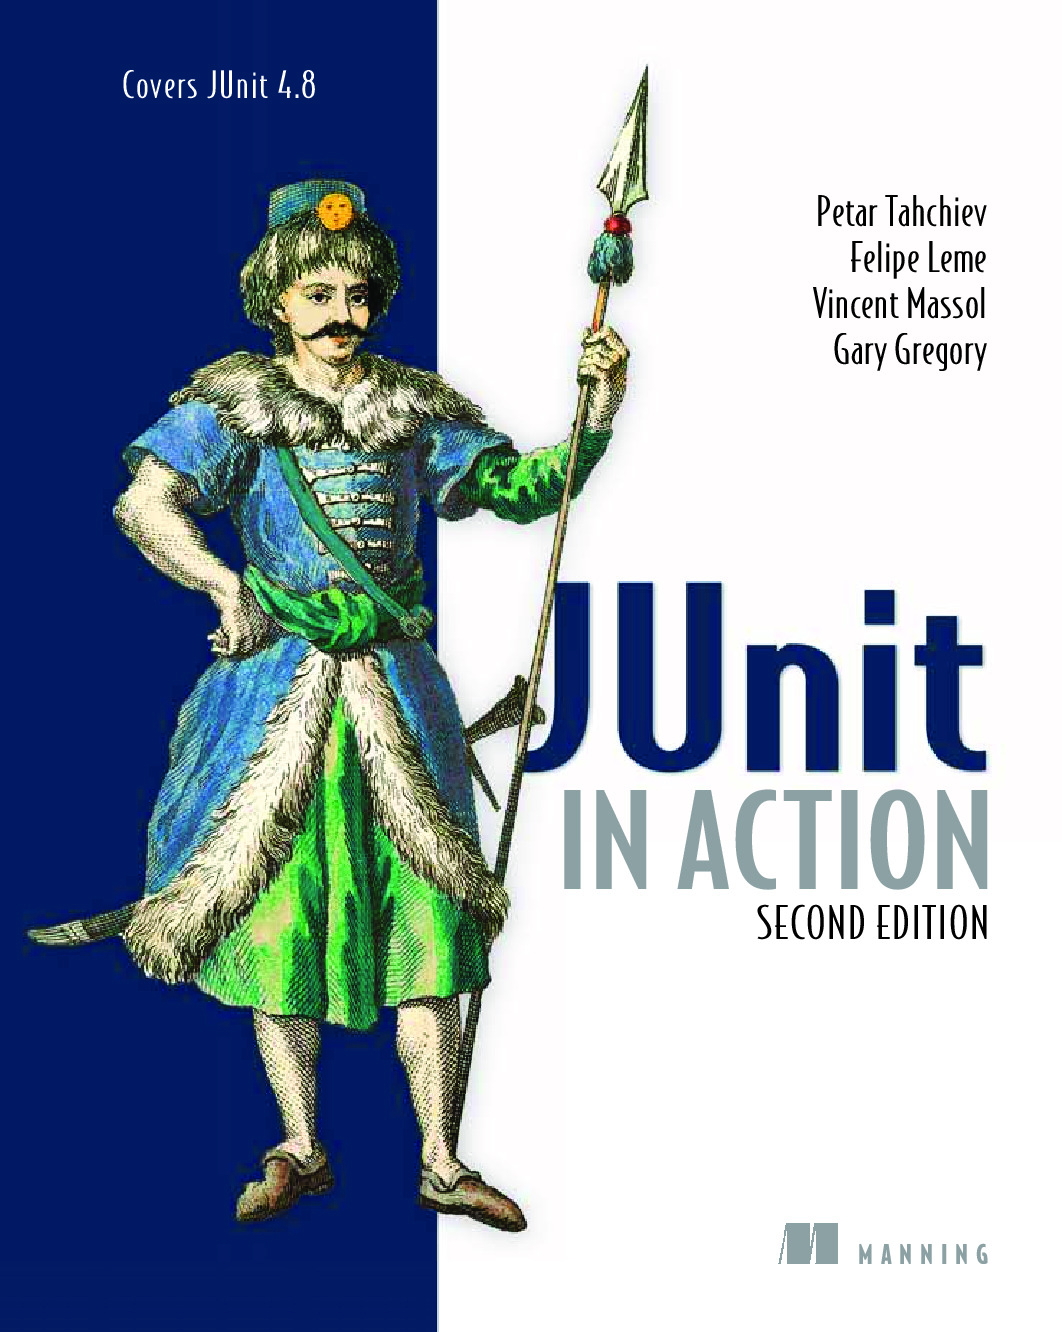 Manning.JUnit.In.Action.2nd.Edition.Jul.2010.ISBN.1935182021